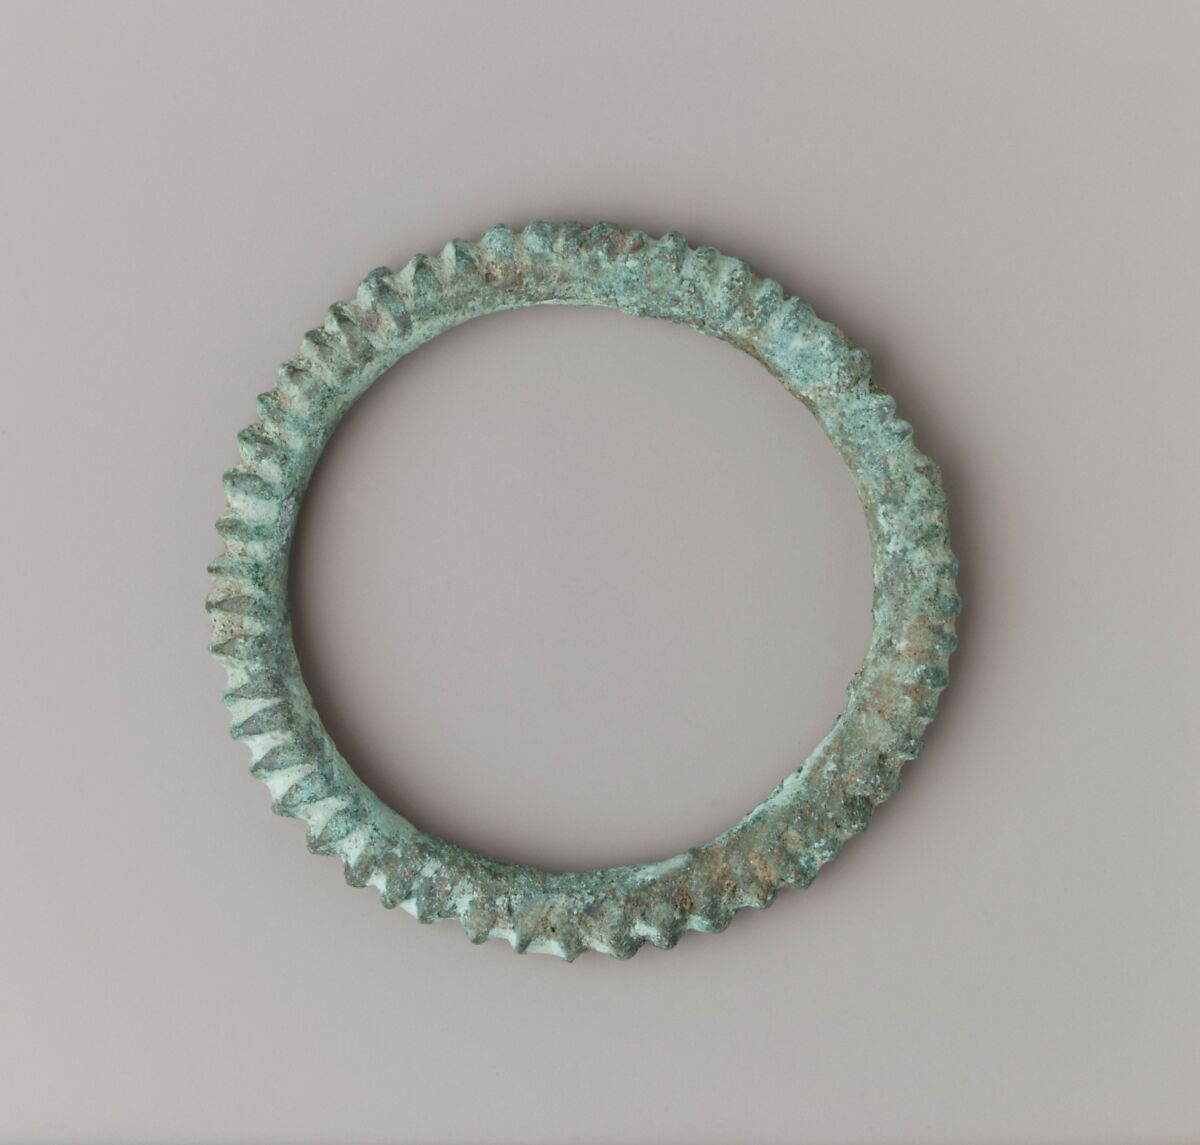 Bracelet, Copper alloy, Middle Niger civilization 